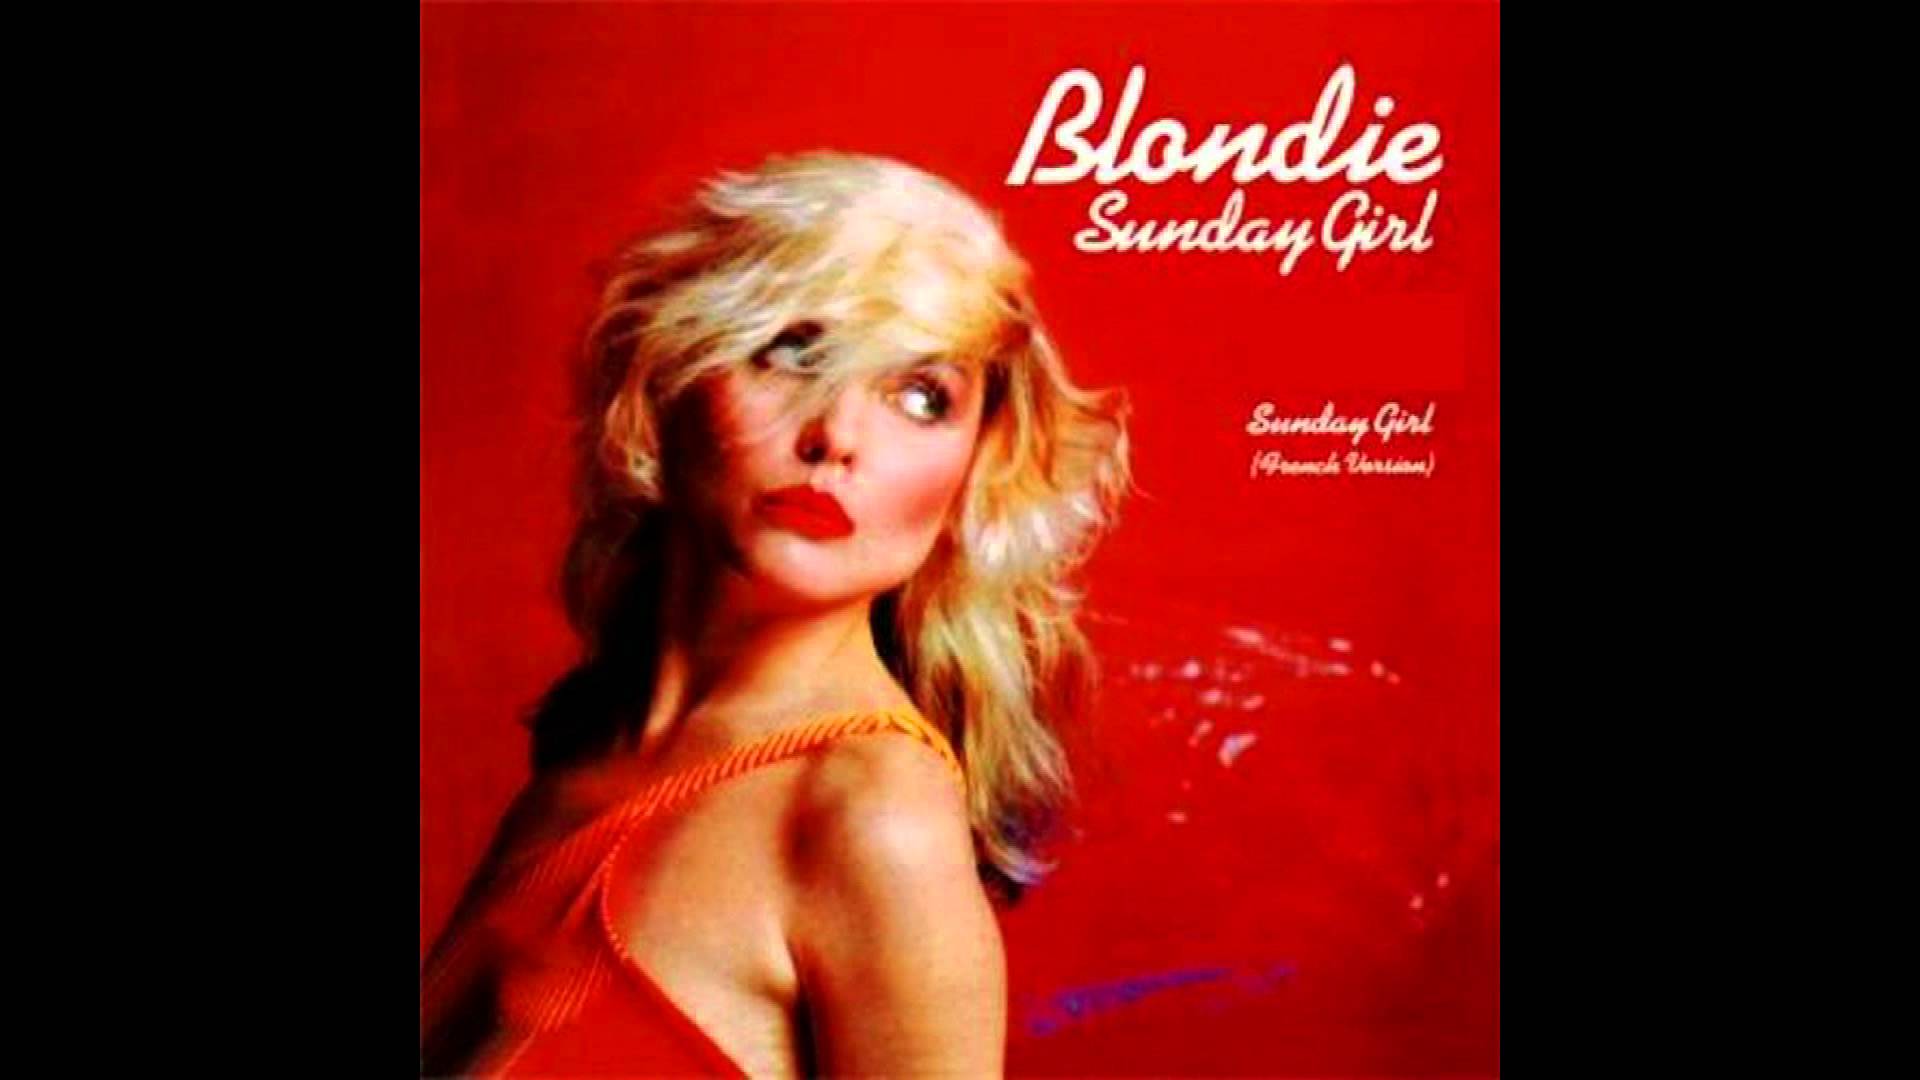 Blondie Sunday Girl (French Version) - YouTube